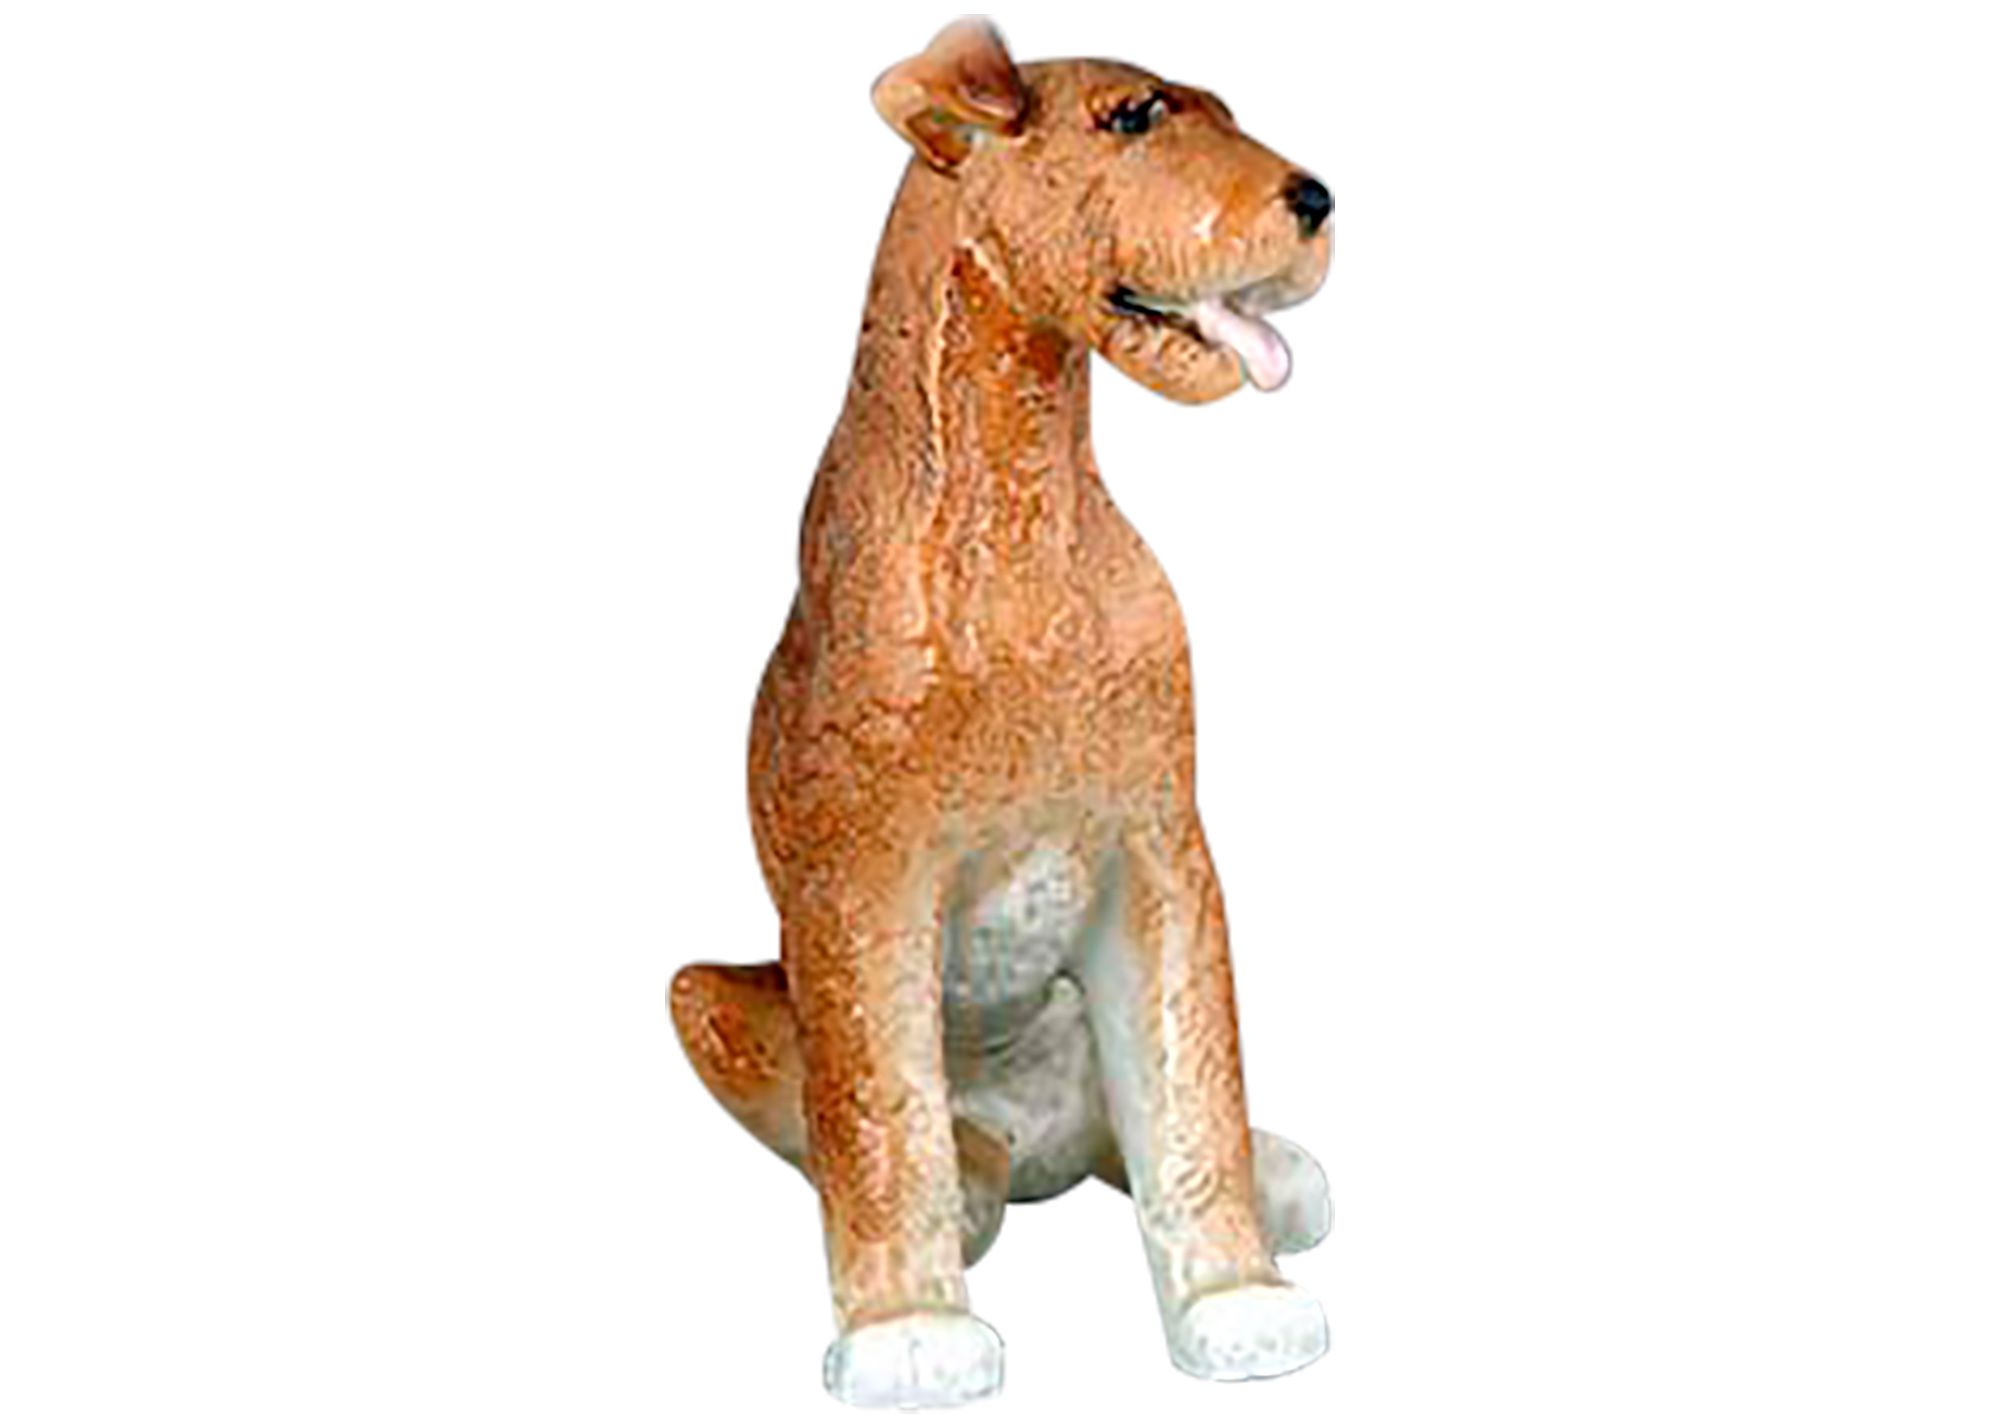 Buy Airedale Dog Figurine at GoldenCockerel.com